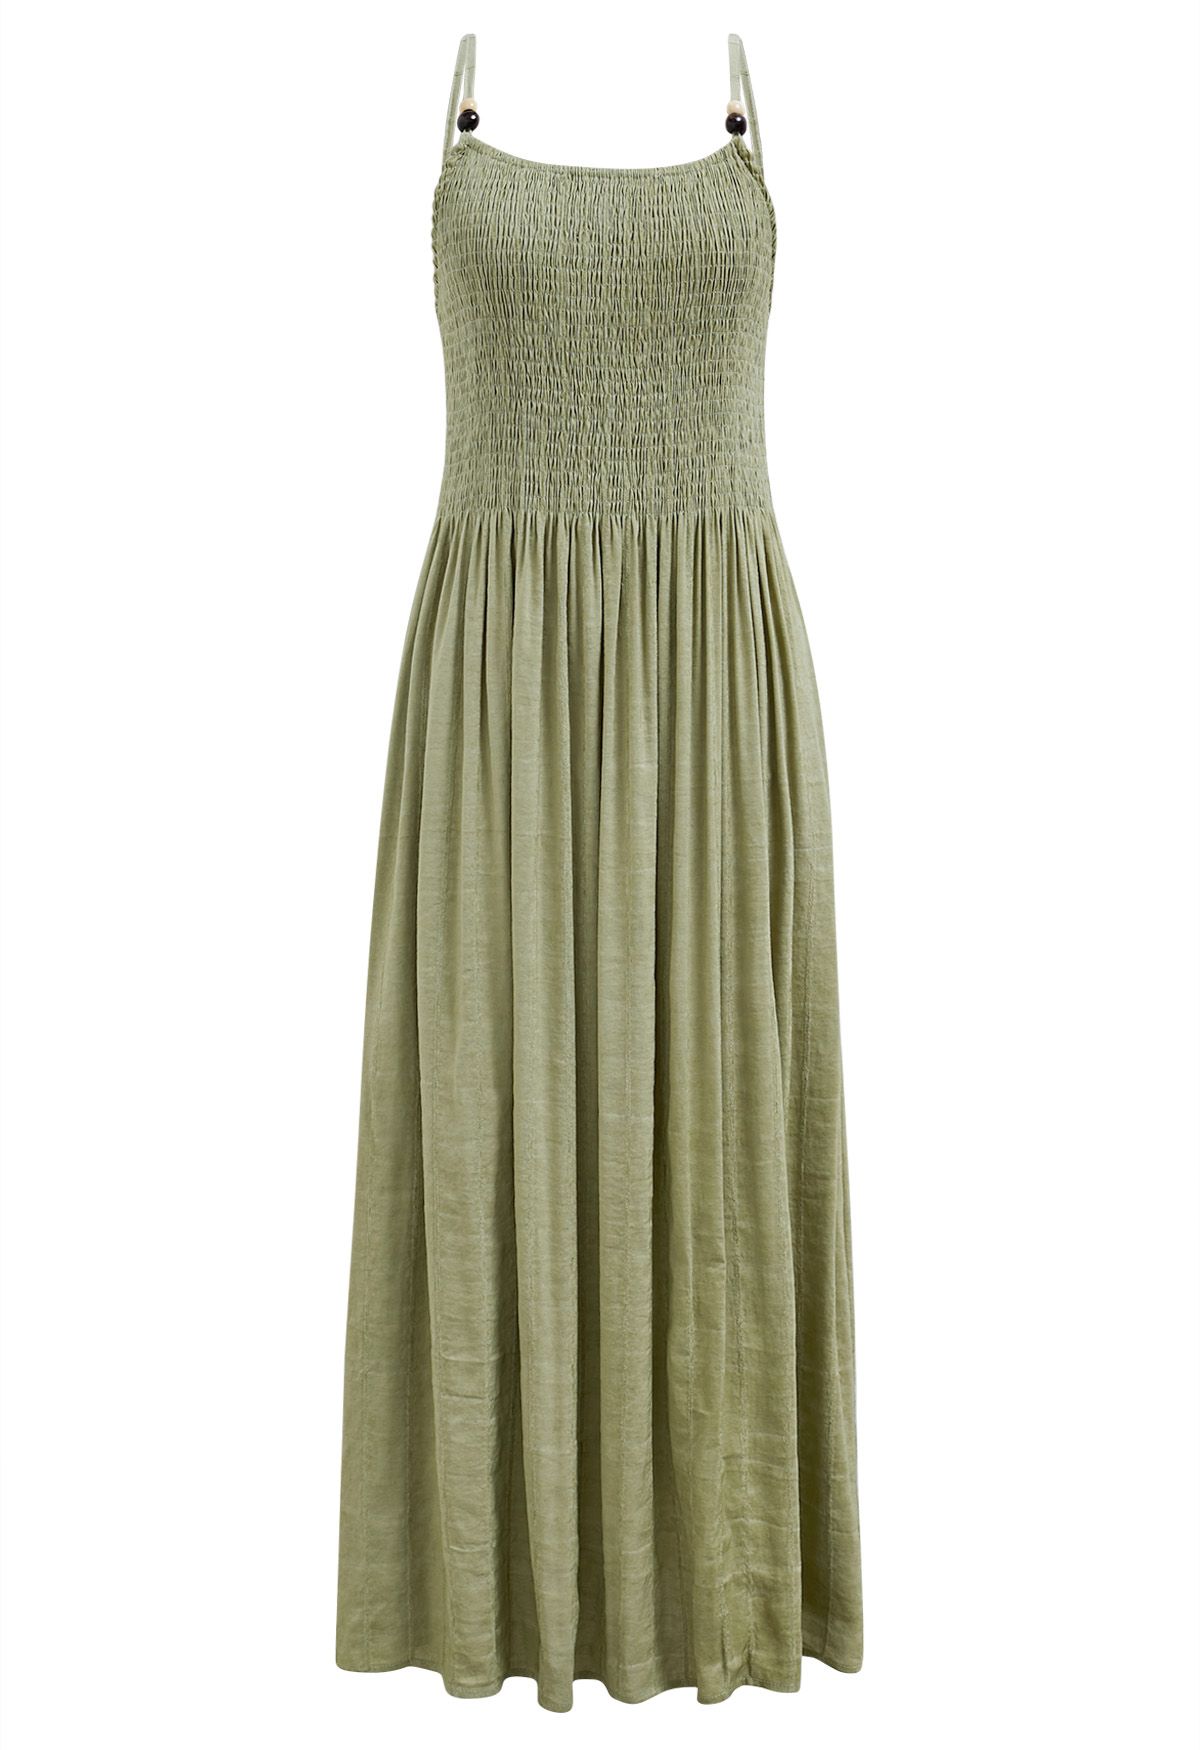 Beaded Strap Shirred Bodice Cami Dress in Pea Green